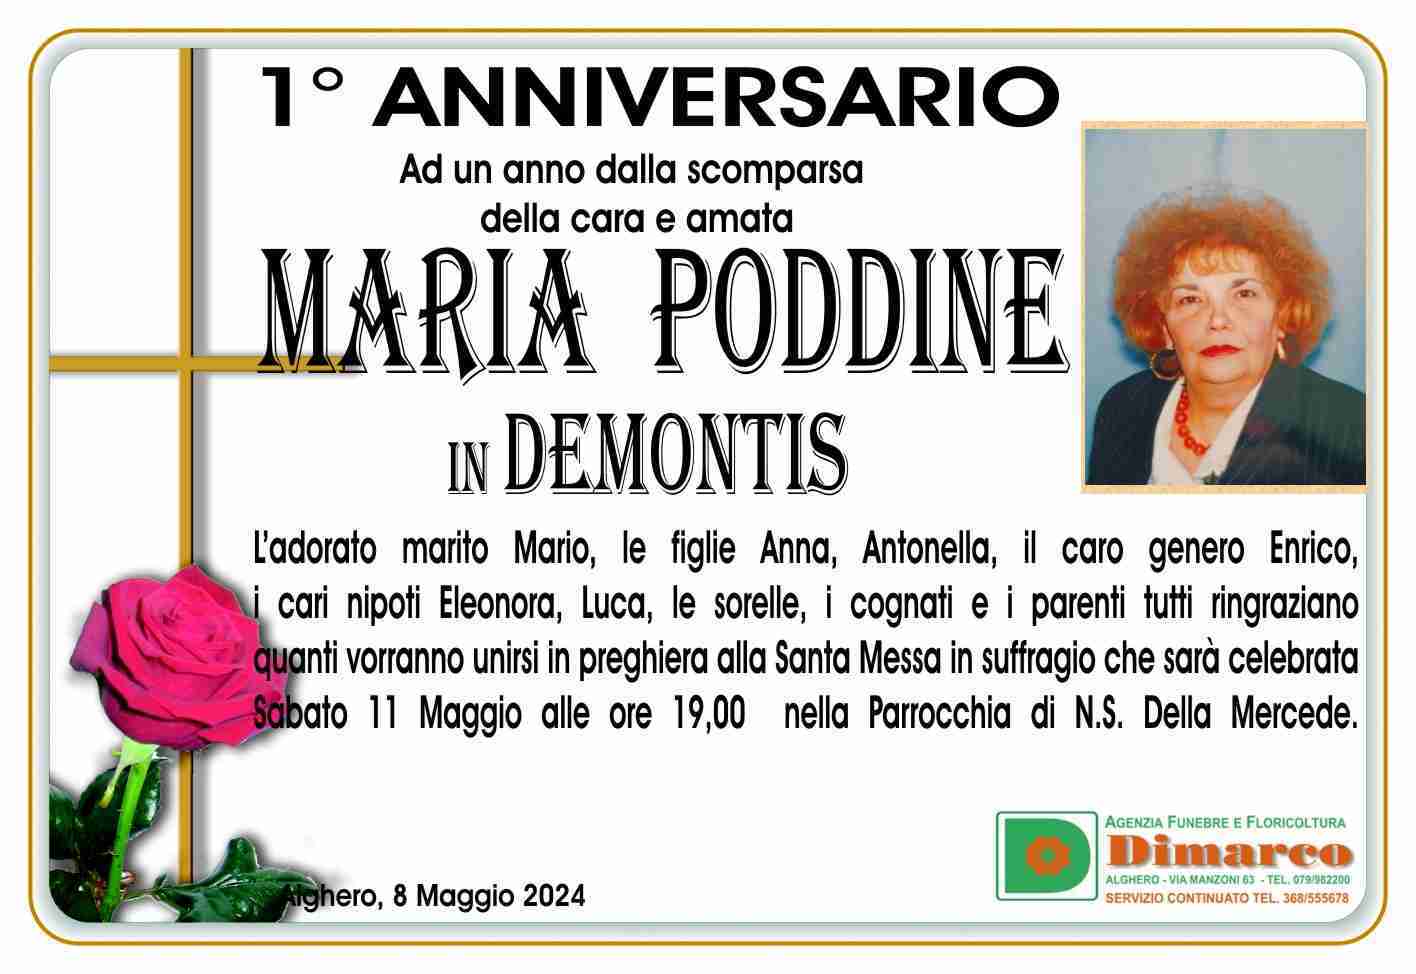 Maria Poddine in Demontis